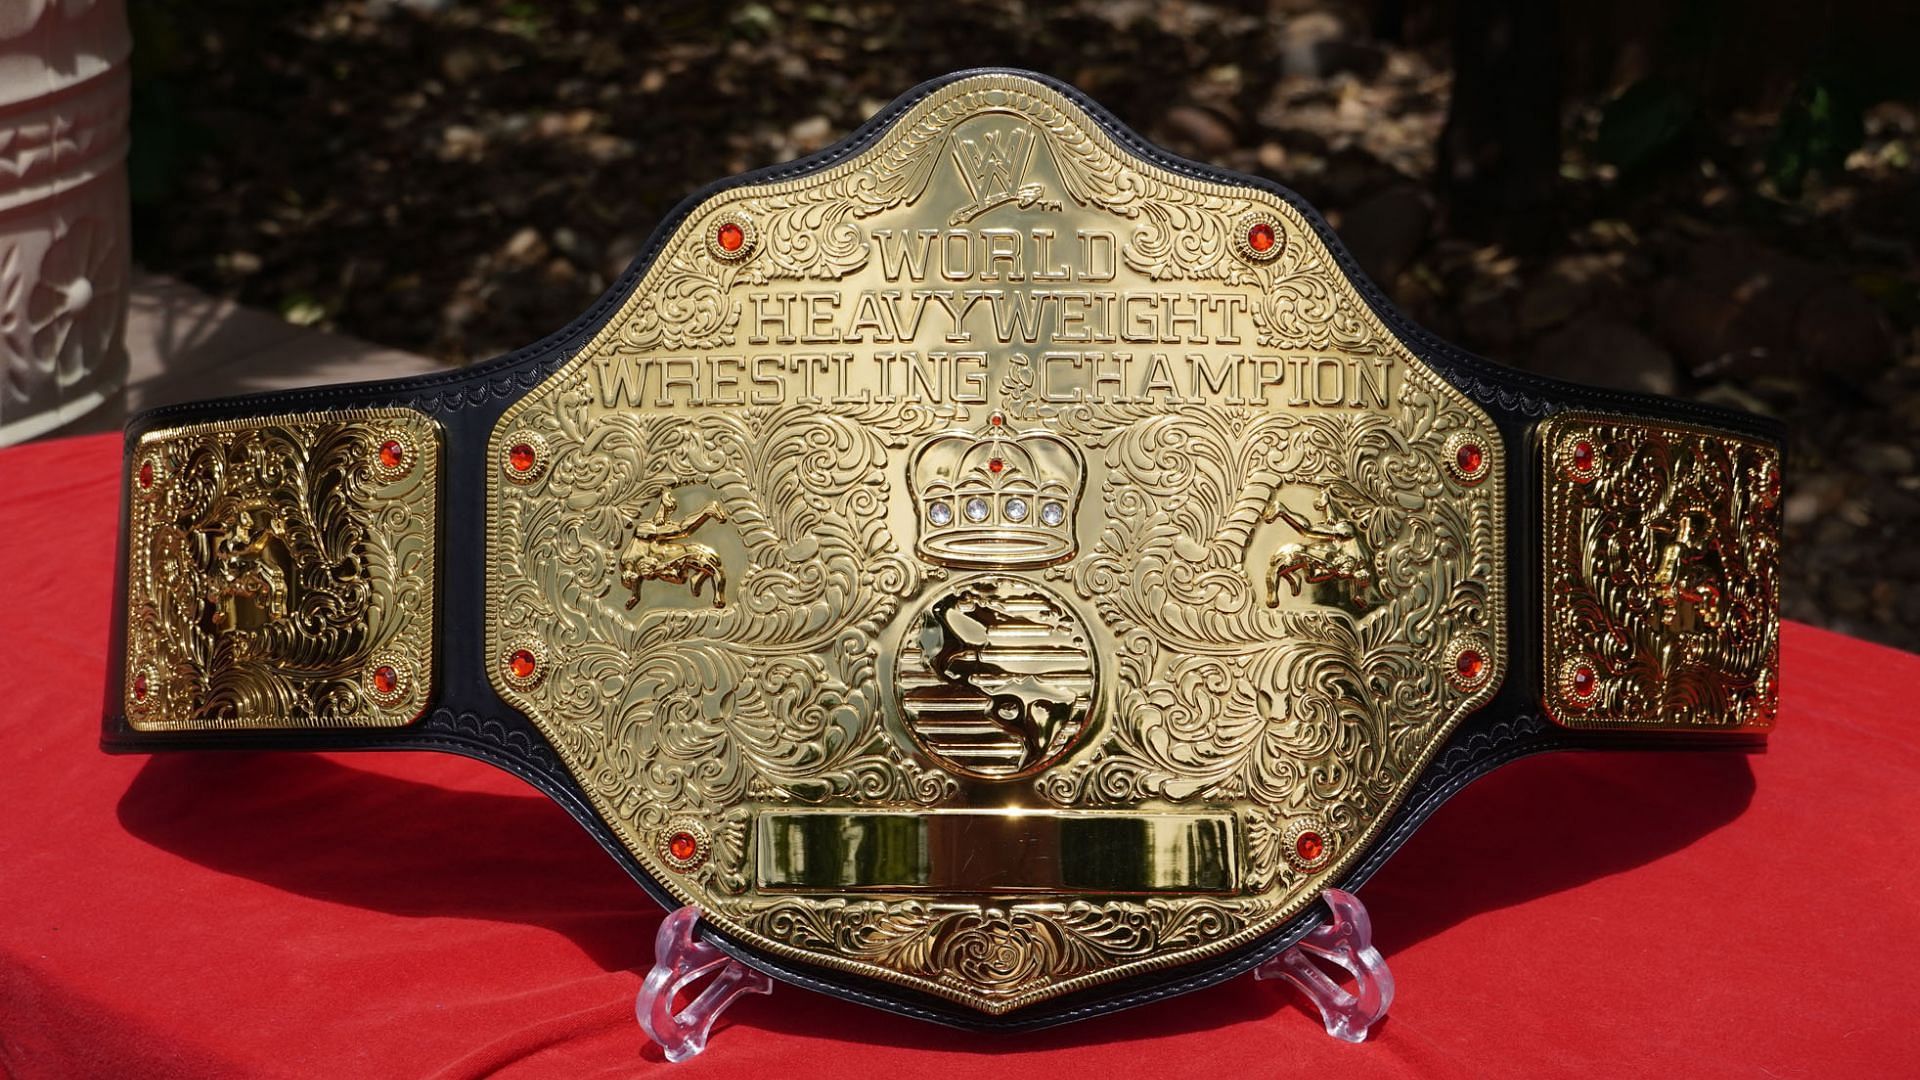 WWE World Heavyweight Championship was retired at TLC 2013!